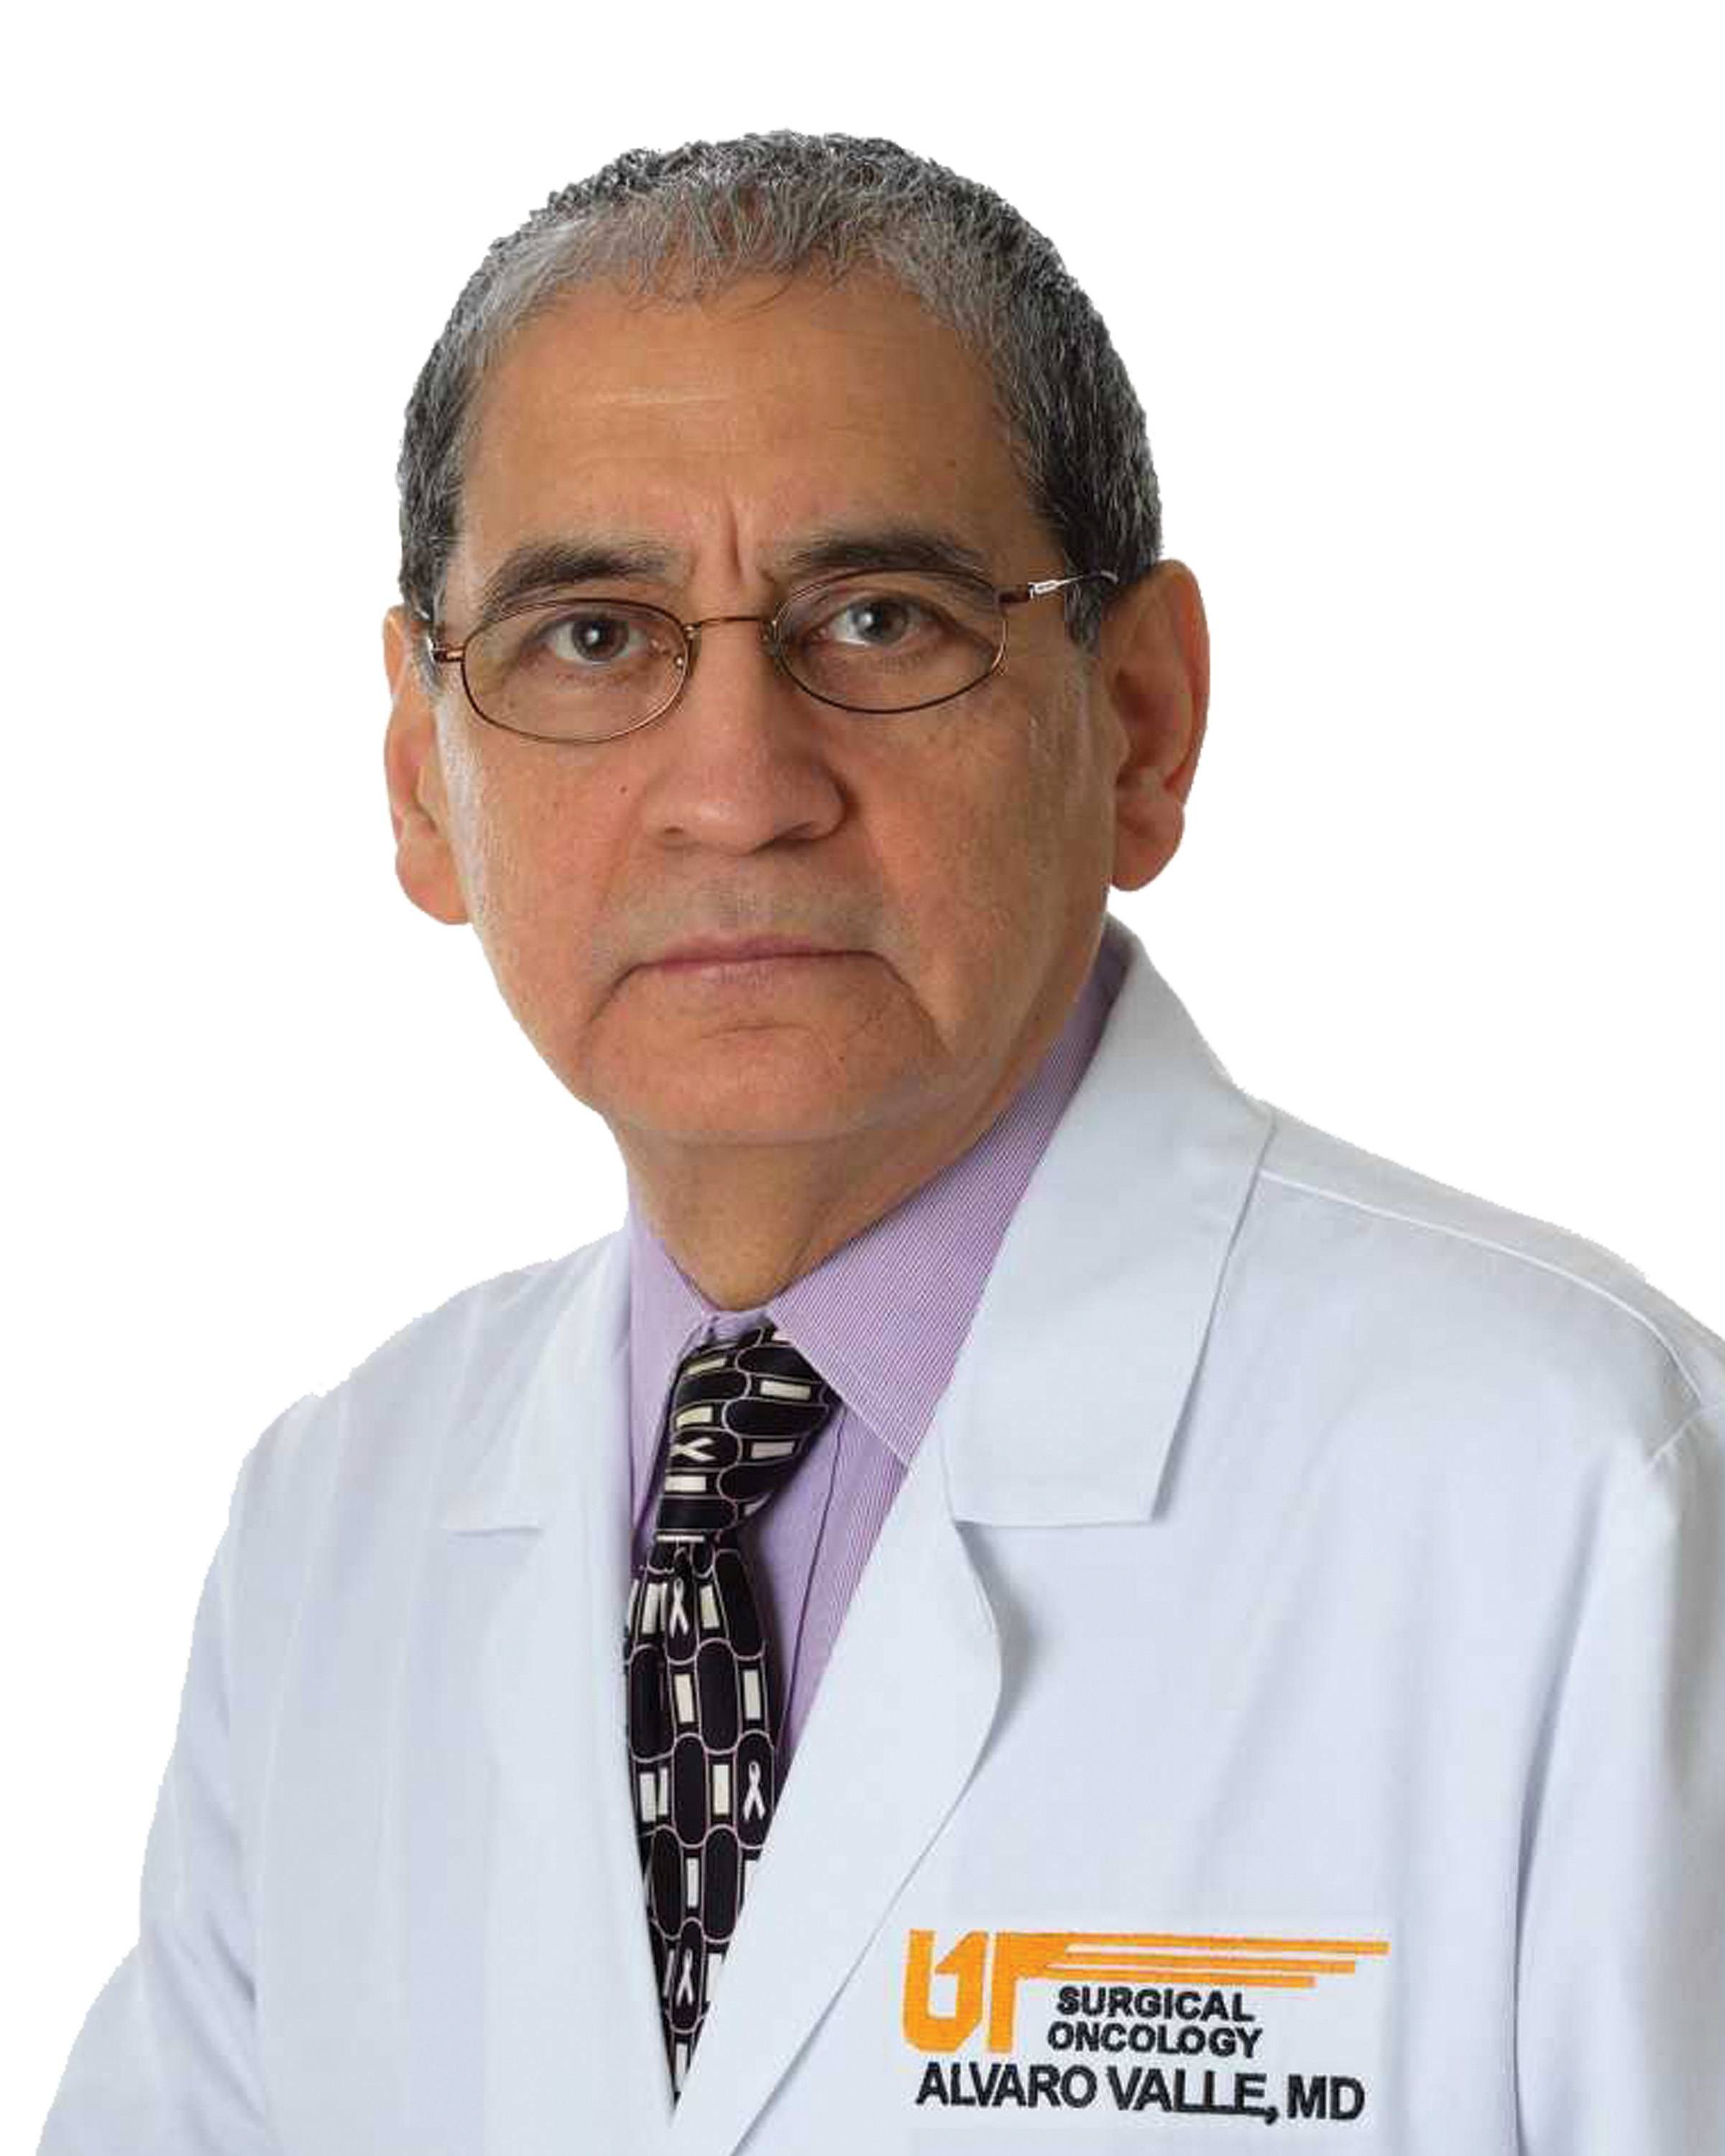 Alvaro Valle, MD, FACS, Faculty, Surgery Residency